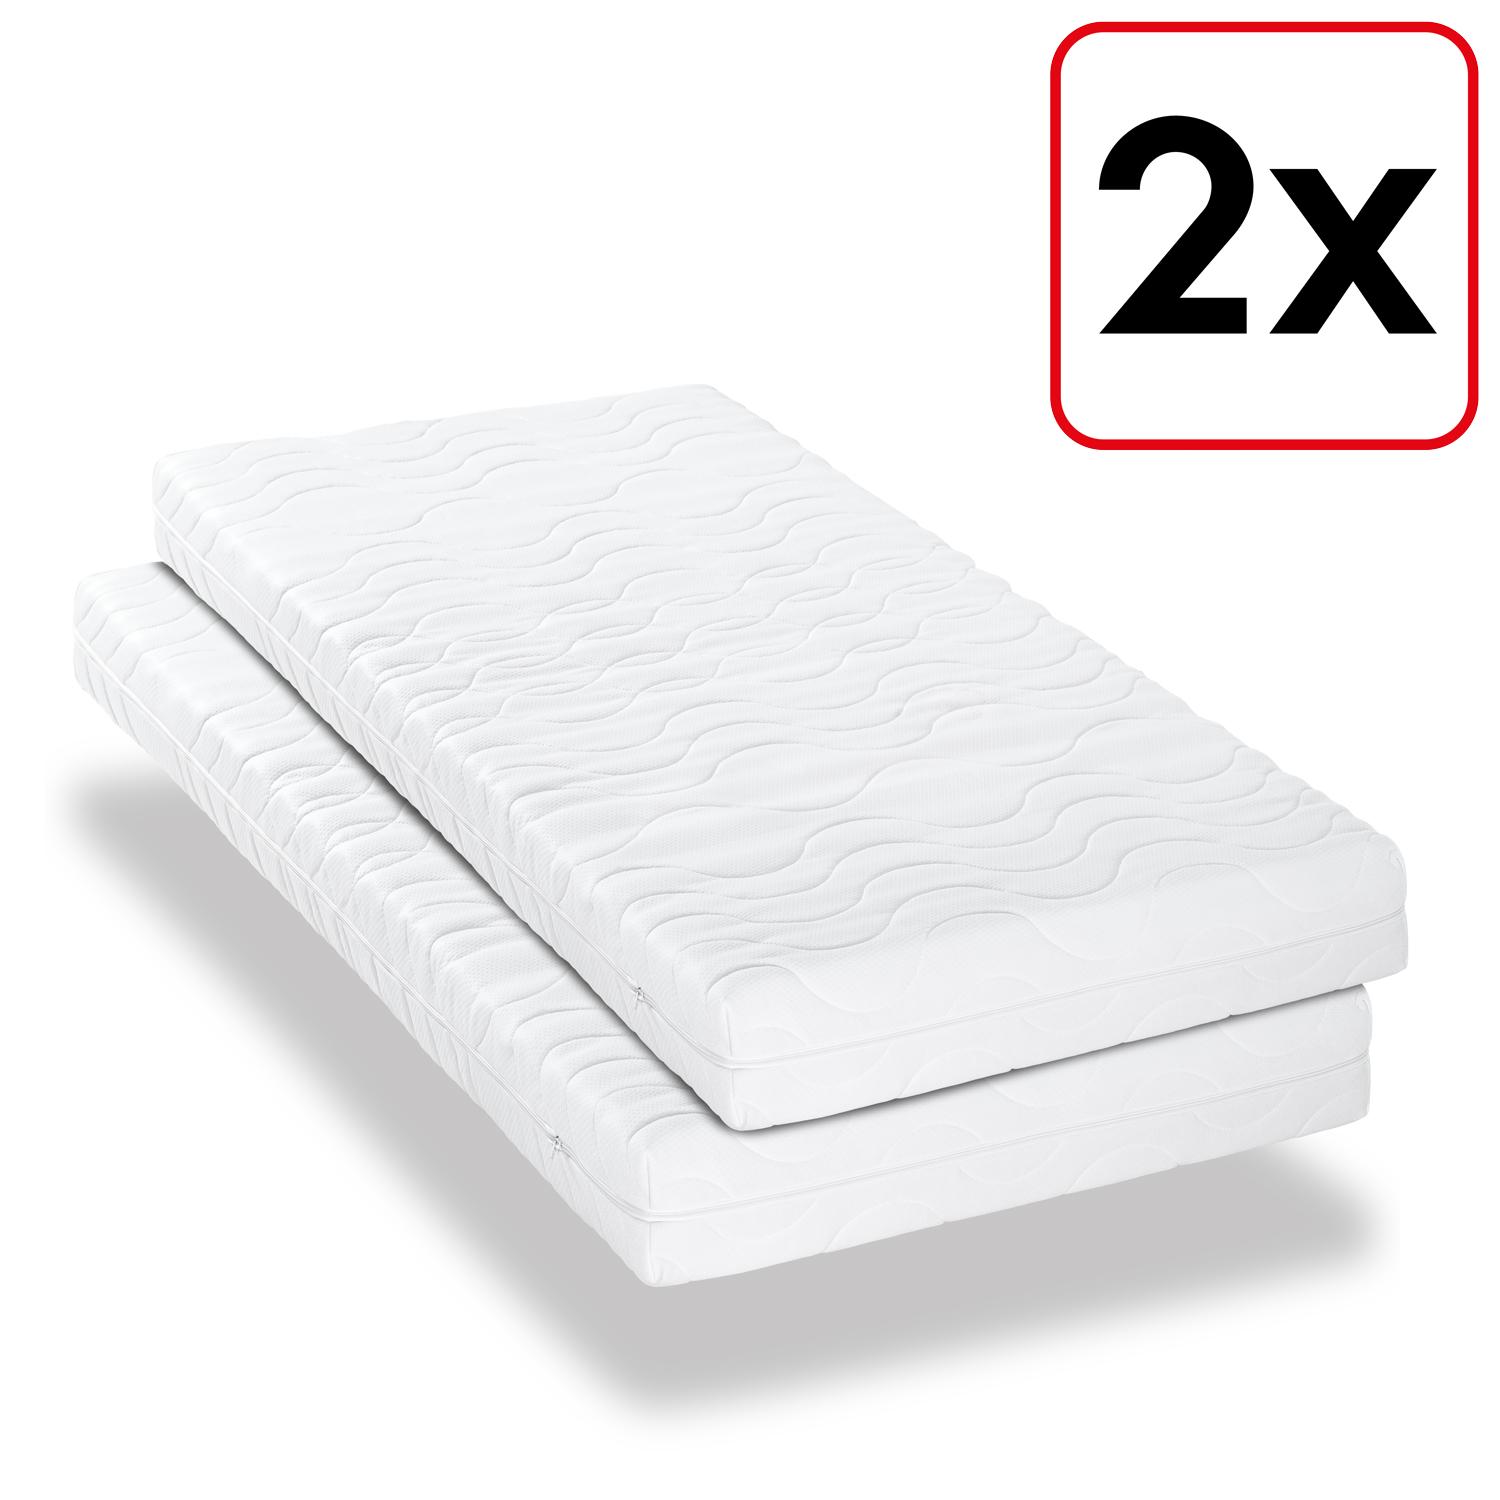 Double pack premium 7-zone mattress 80x200 cm CloudComfort, height 15 cm, firmness level H2/H3, twin set